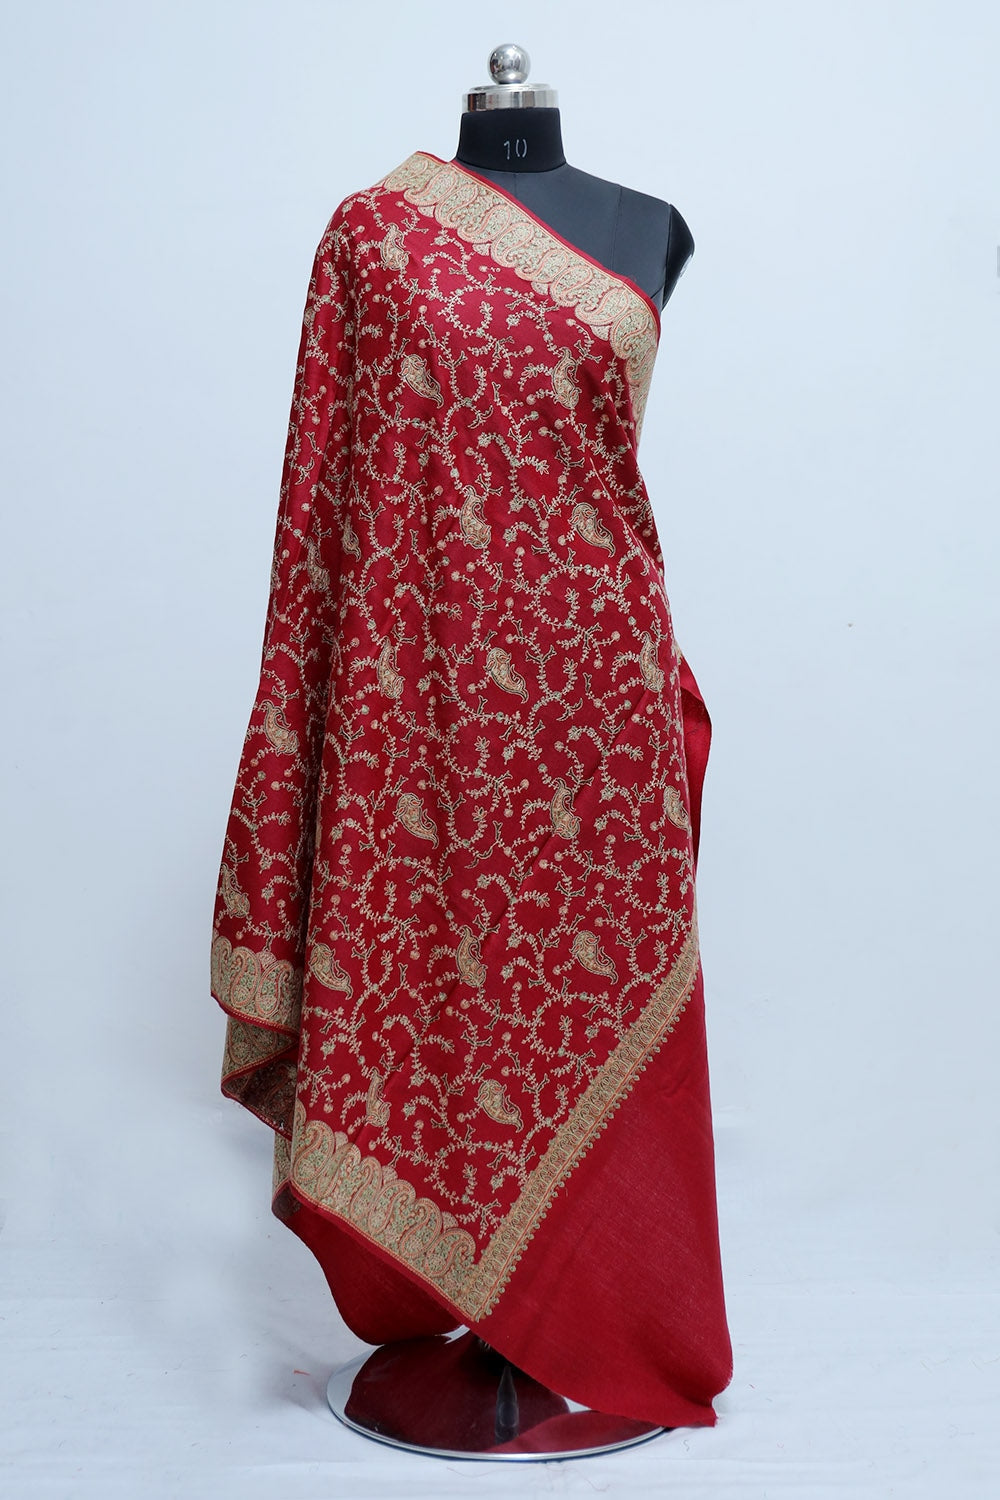 Ravishing Red Colour Sozni Shawl With Beautiful All over